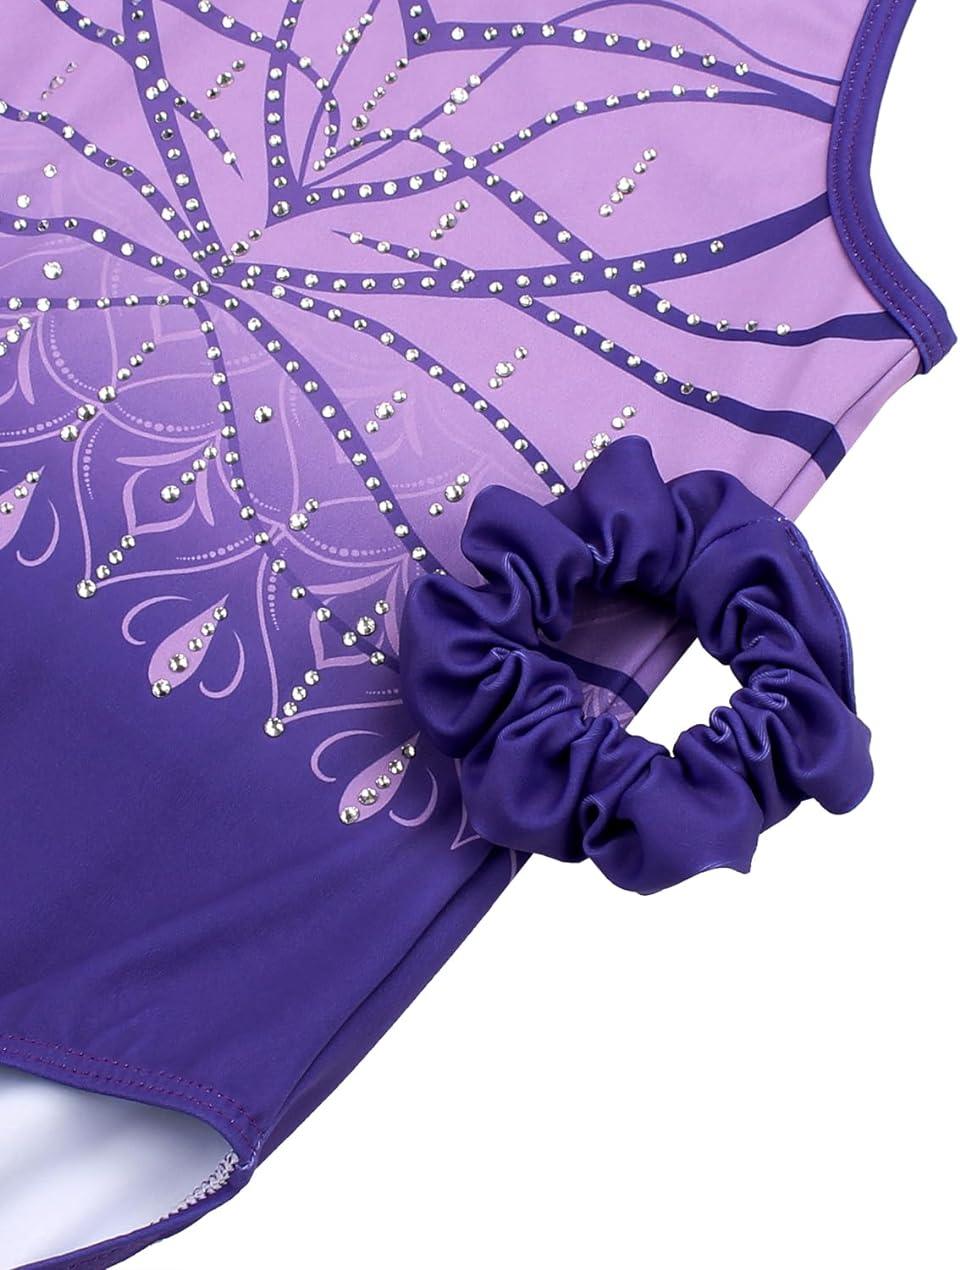 Matching Scrunchie with Violet Lace Pattern Gymnastics Leotard